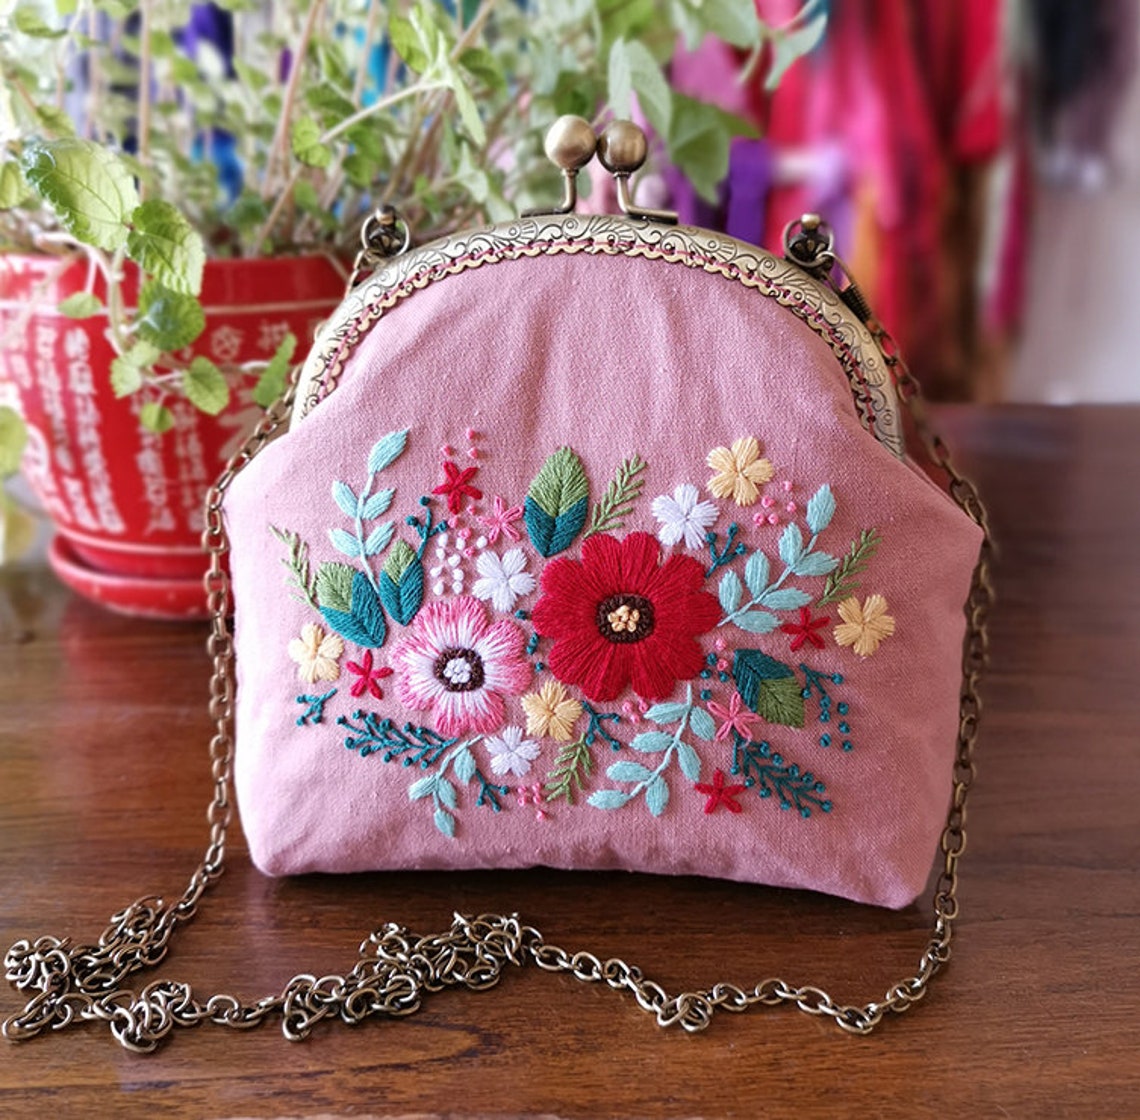 Flower Pattern Hand Embroidery Kitbeginner Canvas Chain Bag | Etsy